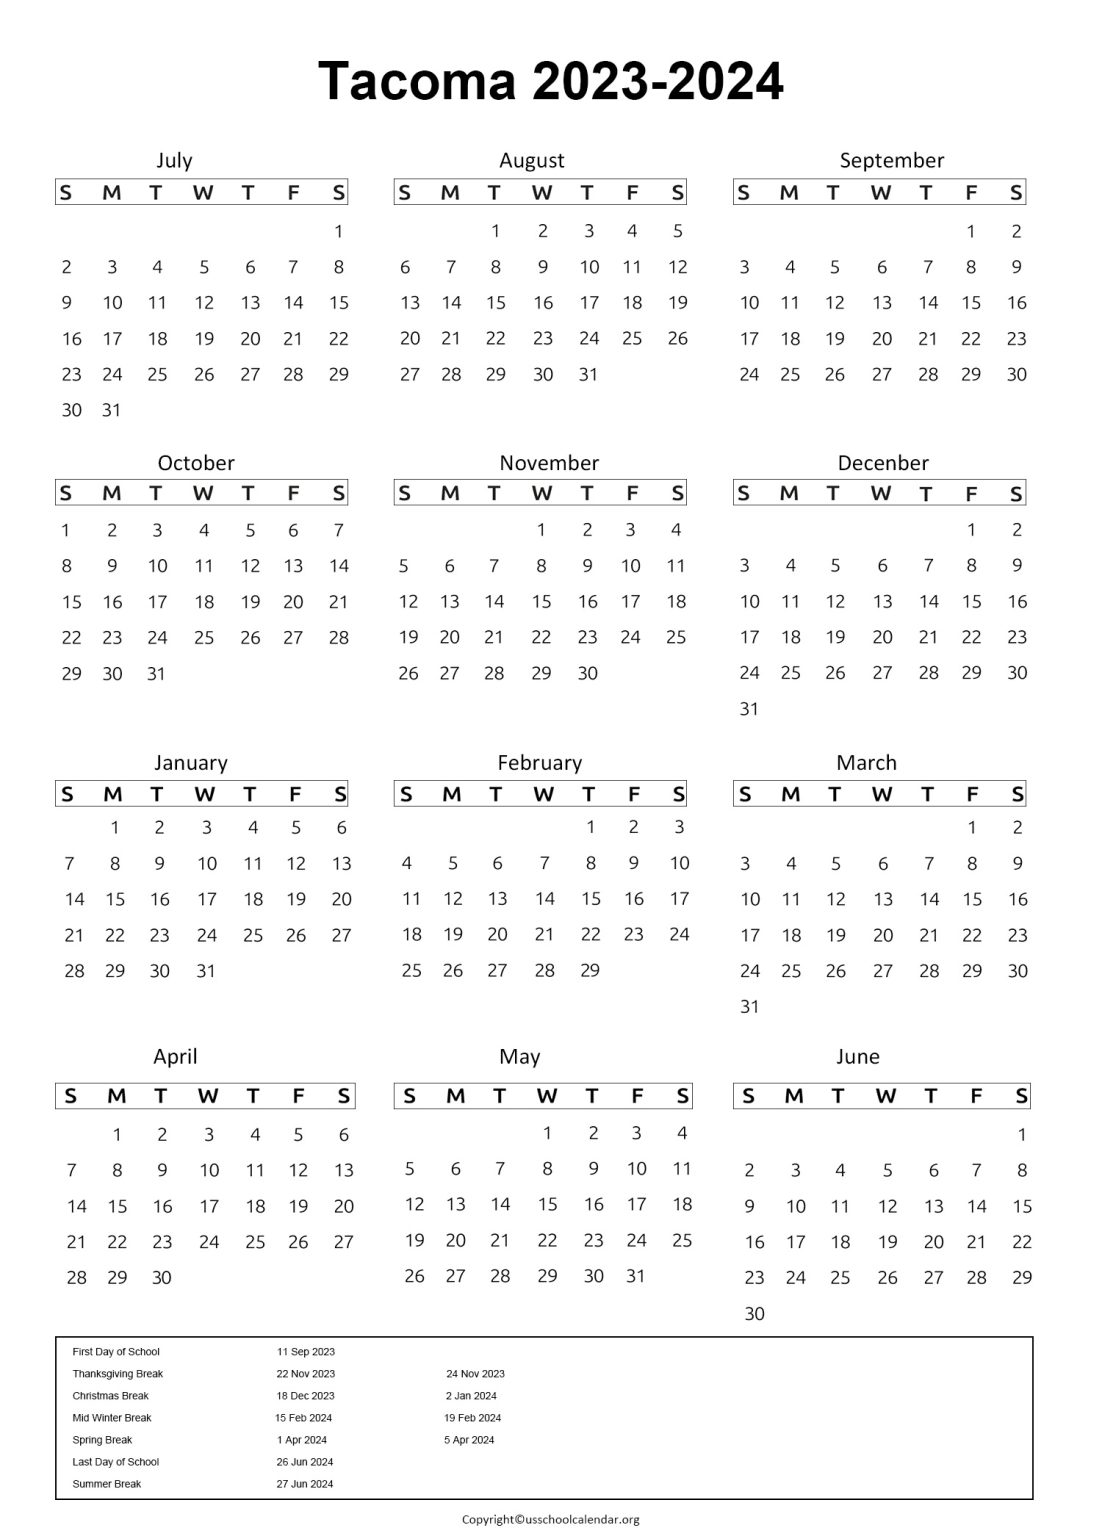 Tacoma Public Schools Calendar with Holidays 2023 2024